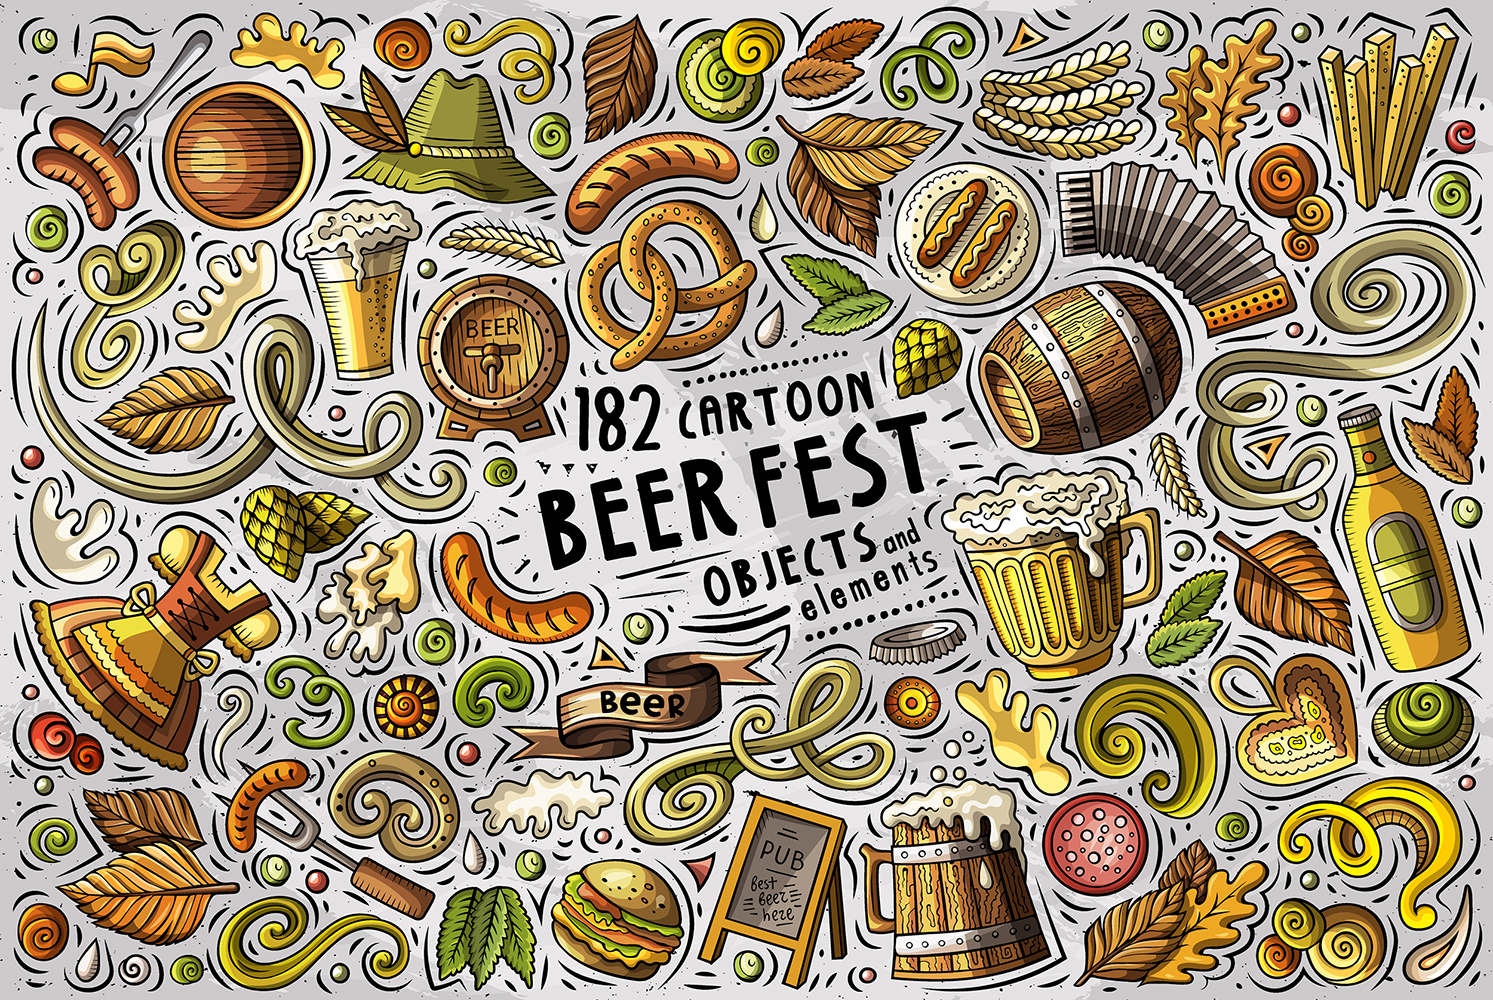 Beer Fest Cartoon Doodle Objects Set - Vector Image